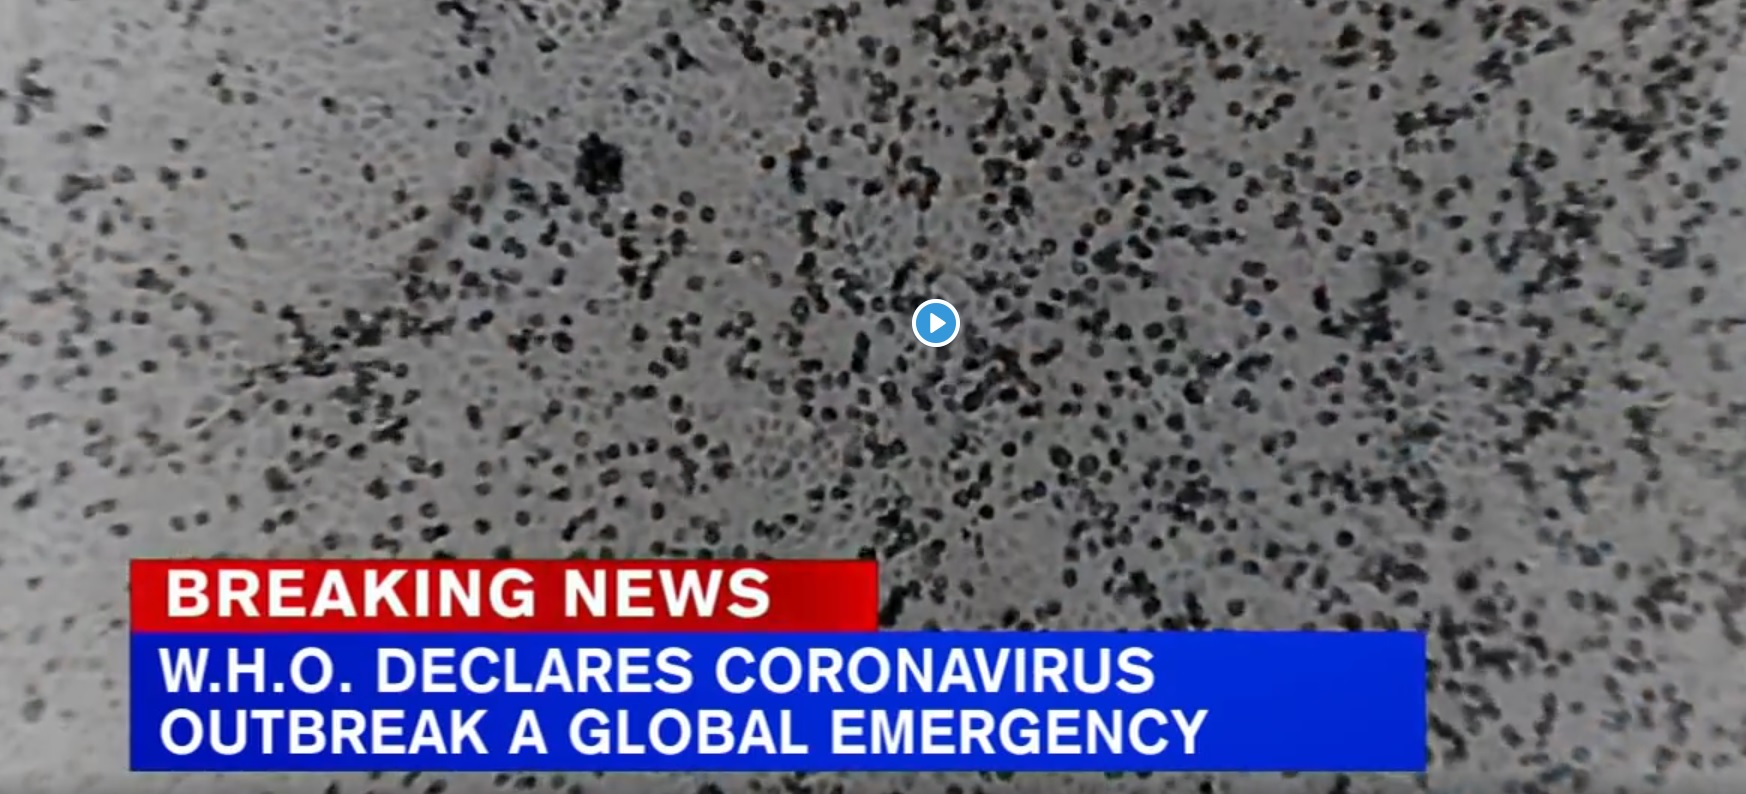 Coronavirus is merely our latest most dangerous pathogen.